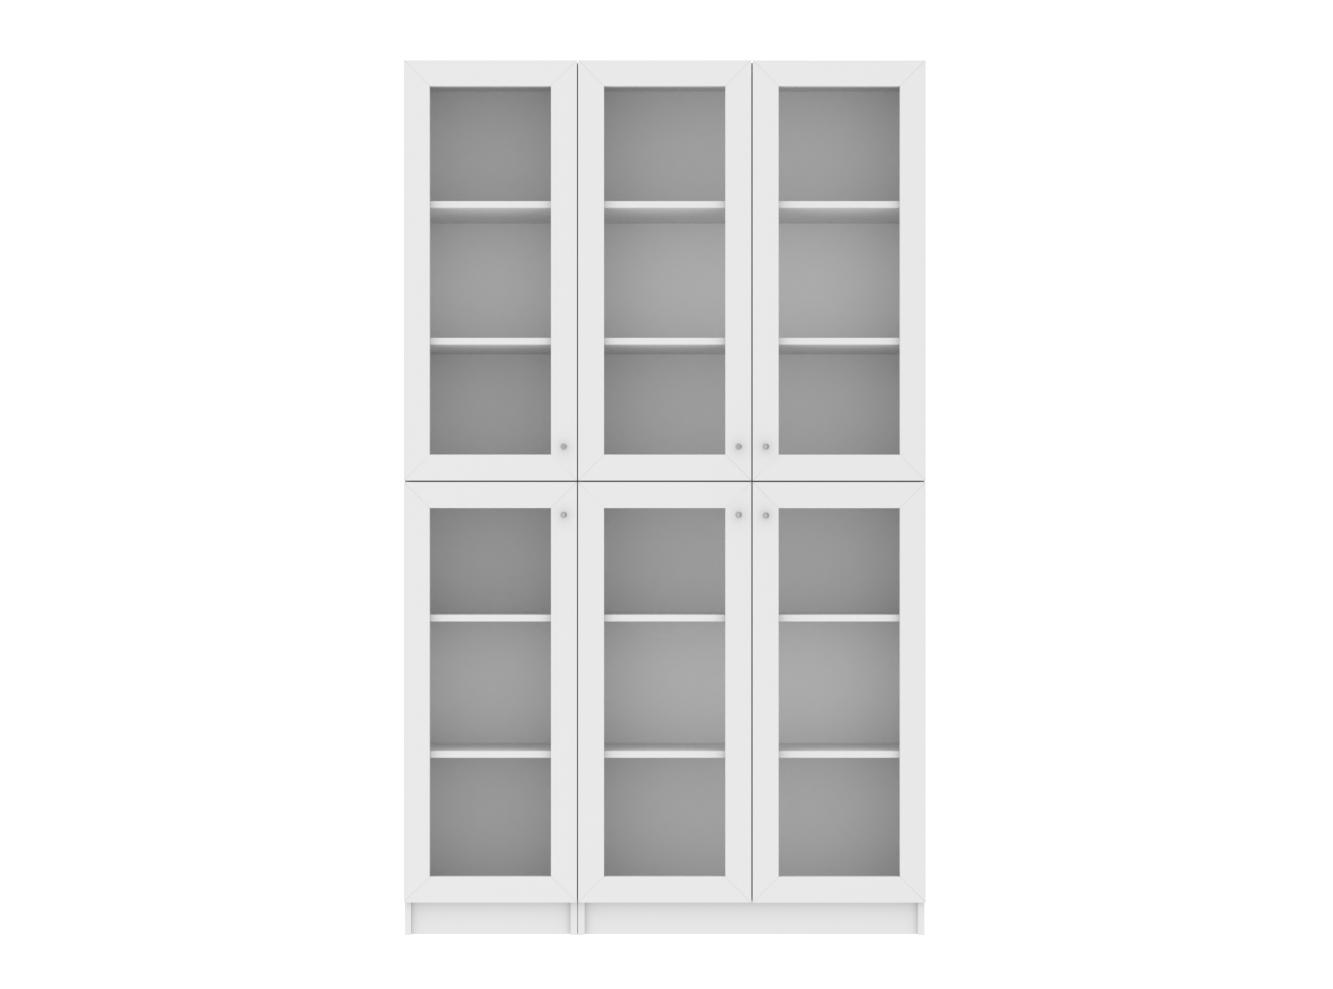  Книжный шкаф Билли 339 white desire ИКЕА (IKEA) изображение товара